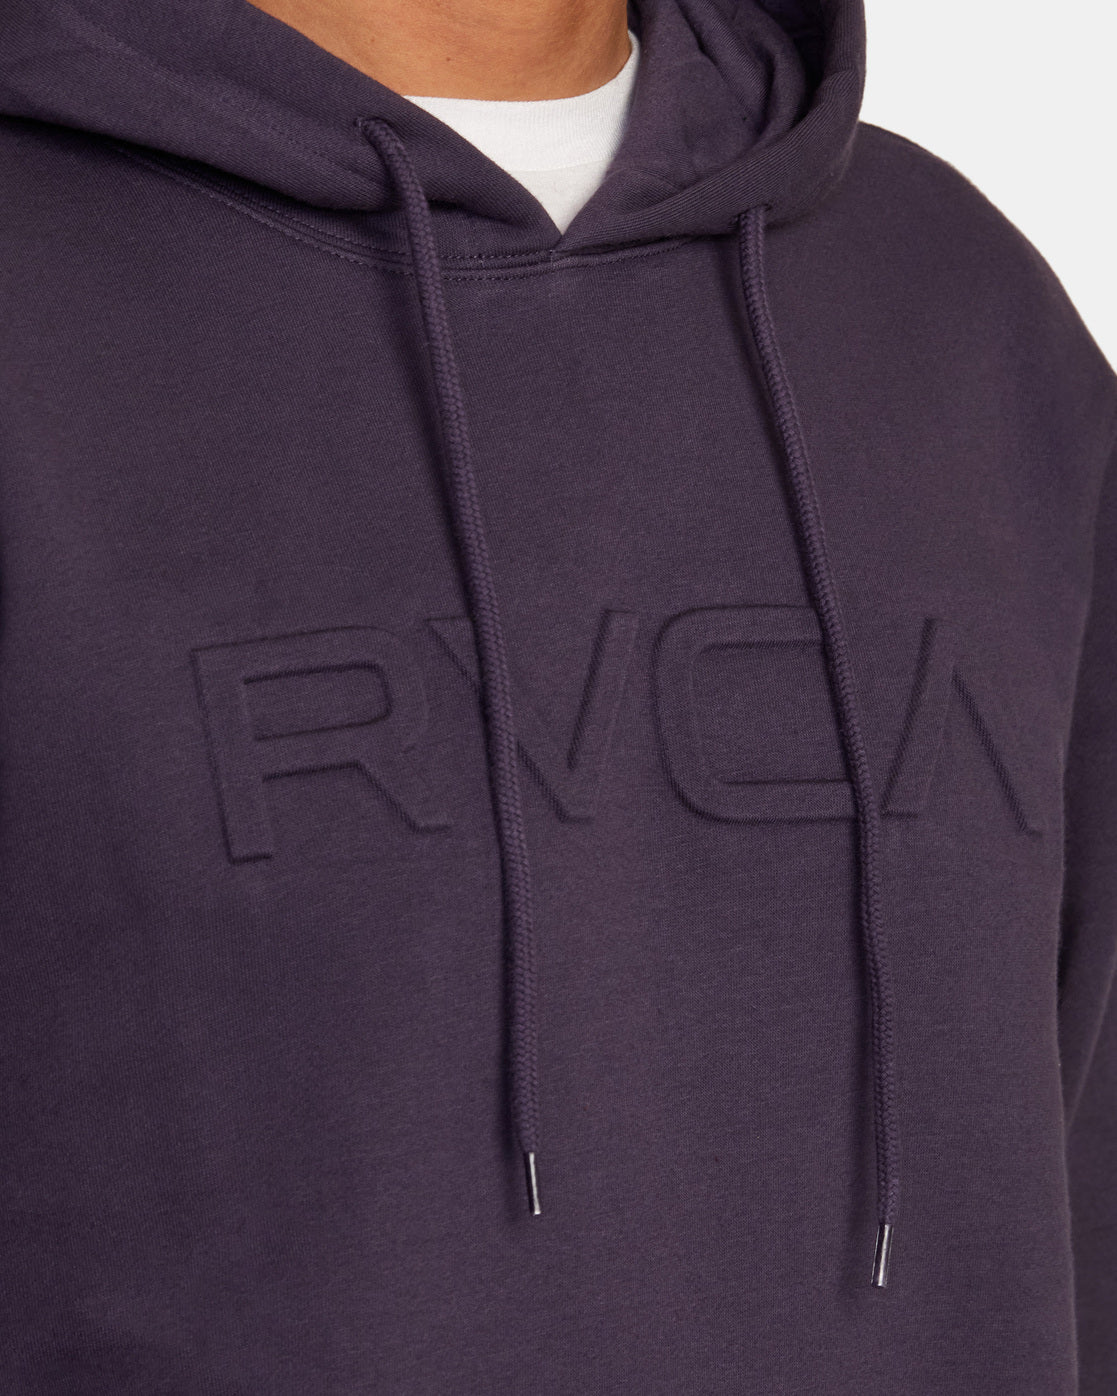 Big RVCA Pigment Hoodie - Coast Clothing